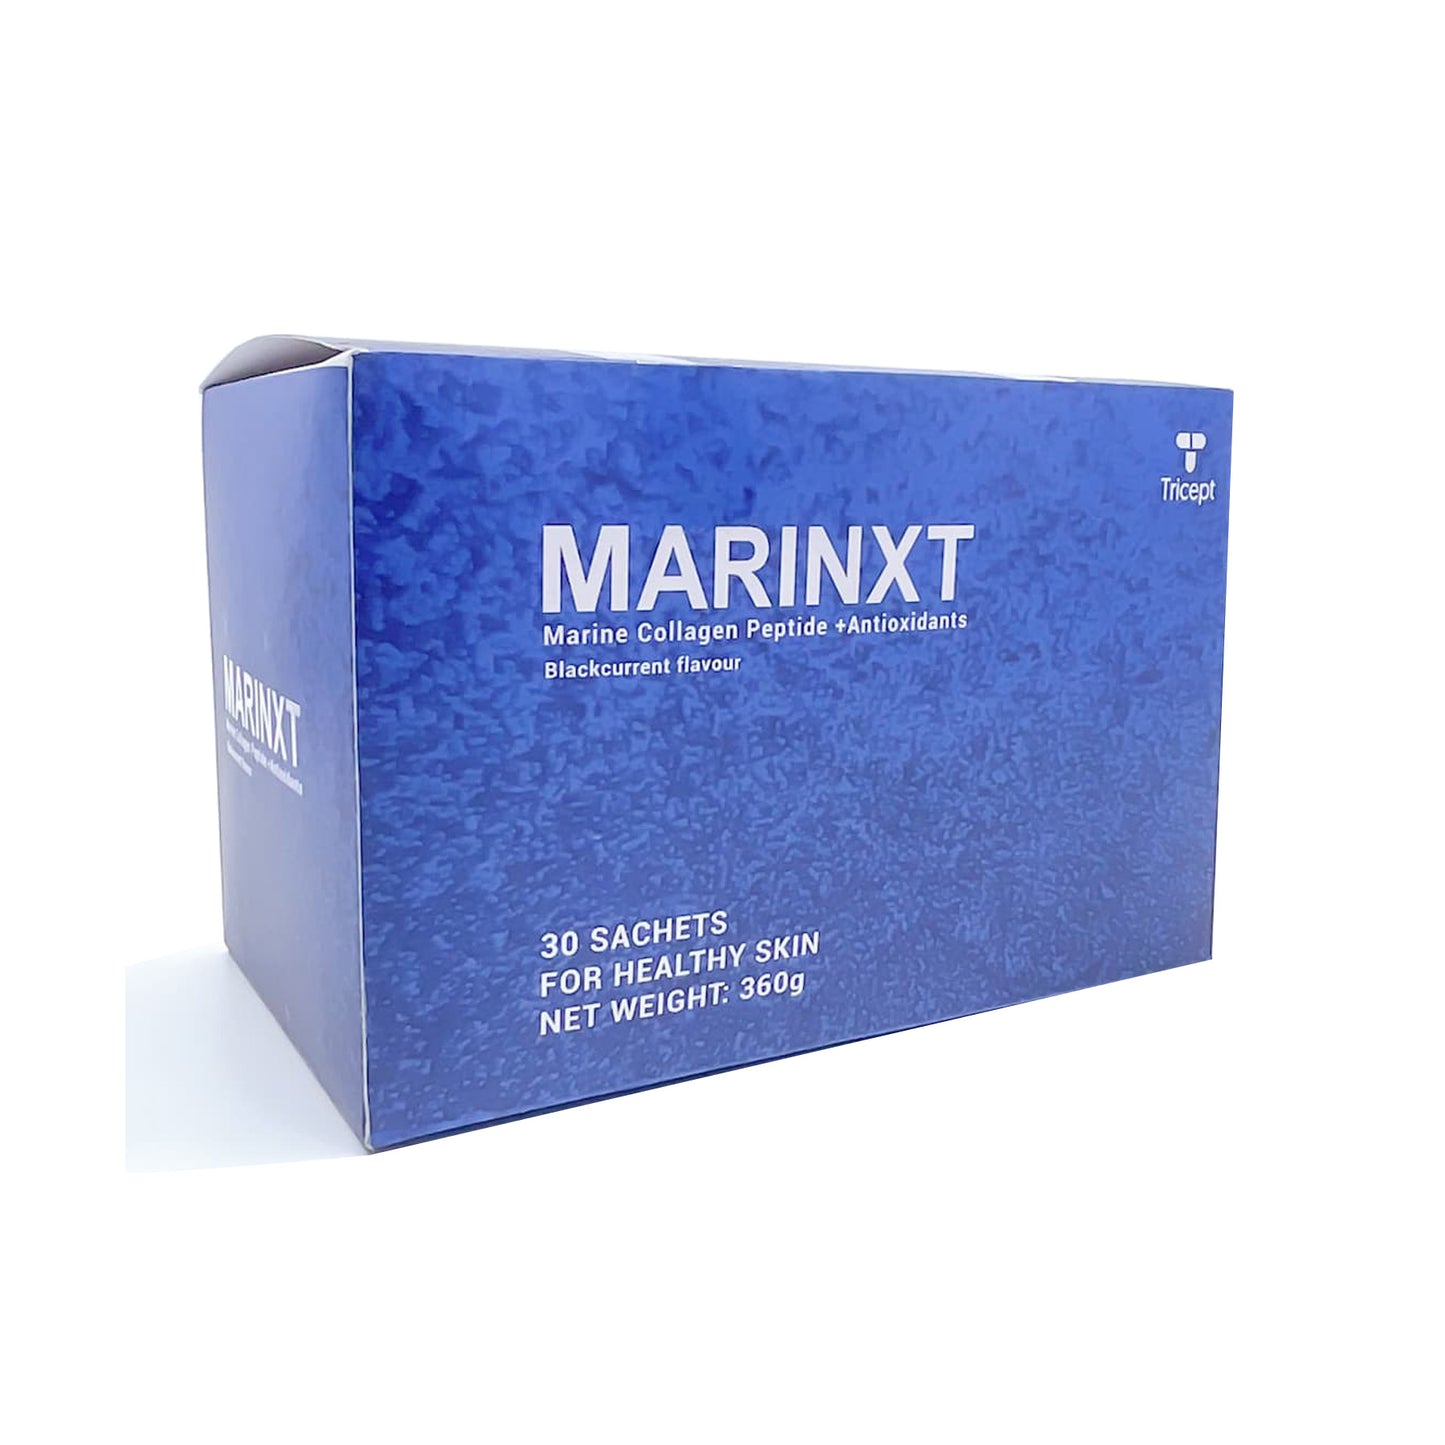 Marinxt Marine Collagen Peptide + Antioxidants, 30 Sachets